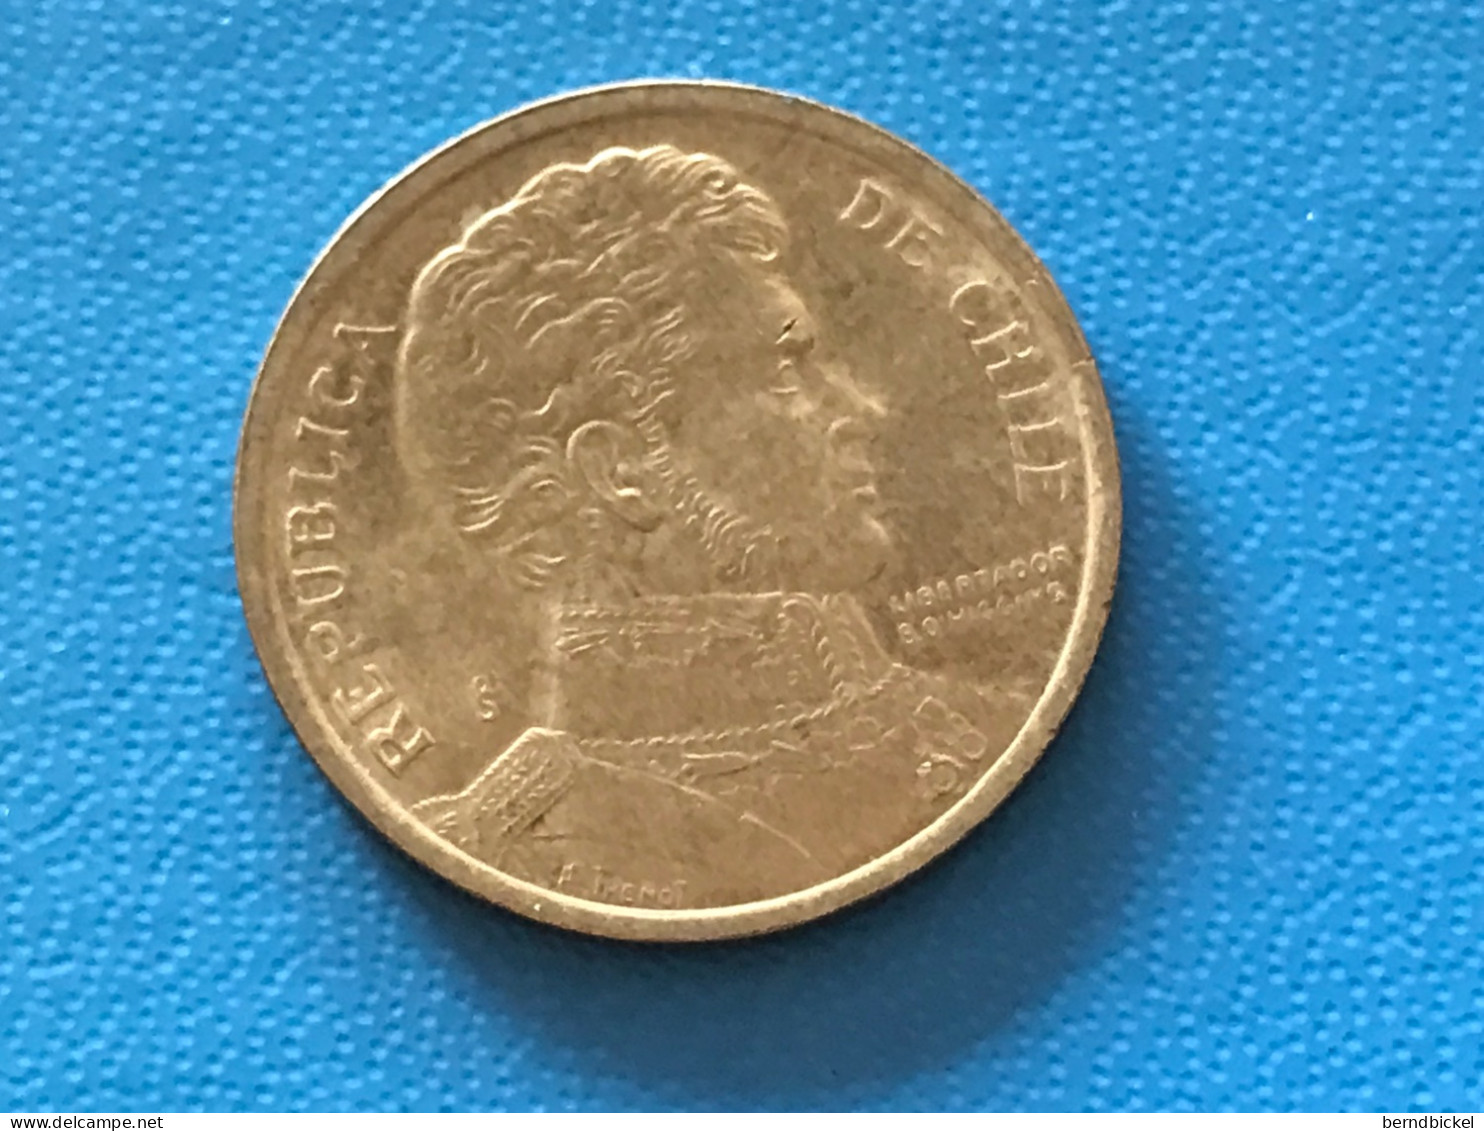 Münze Münzen Umlaufmünze Chile 10 Pesos 2006 - Chile